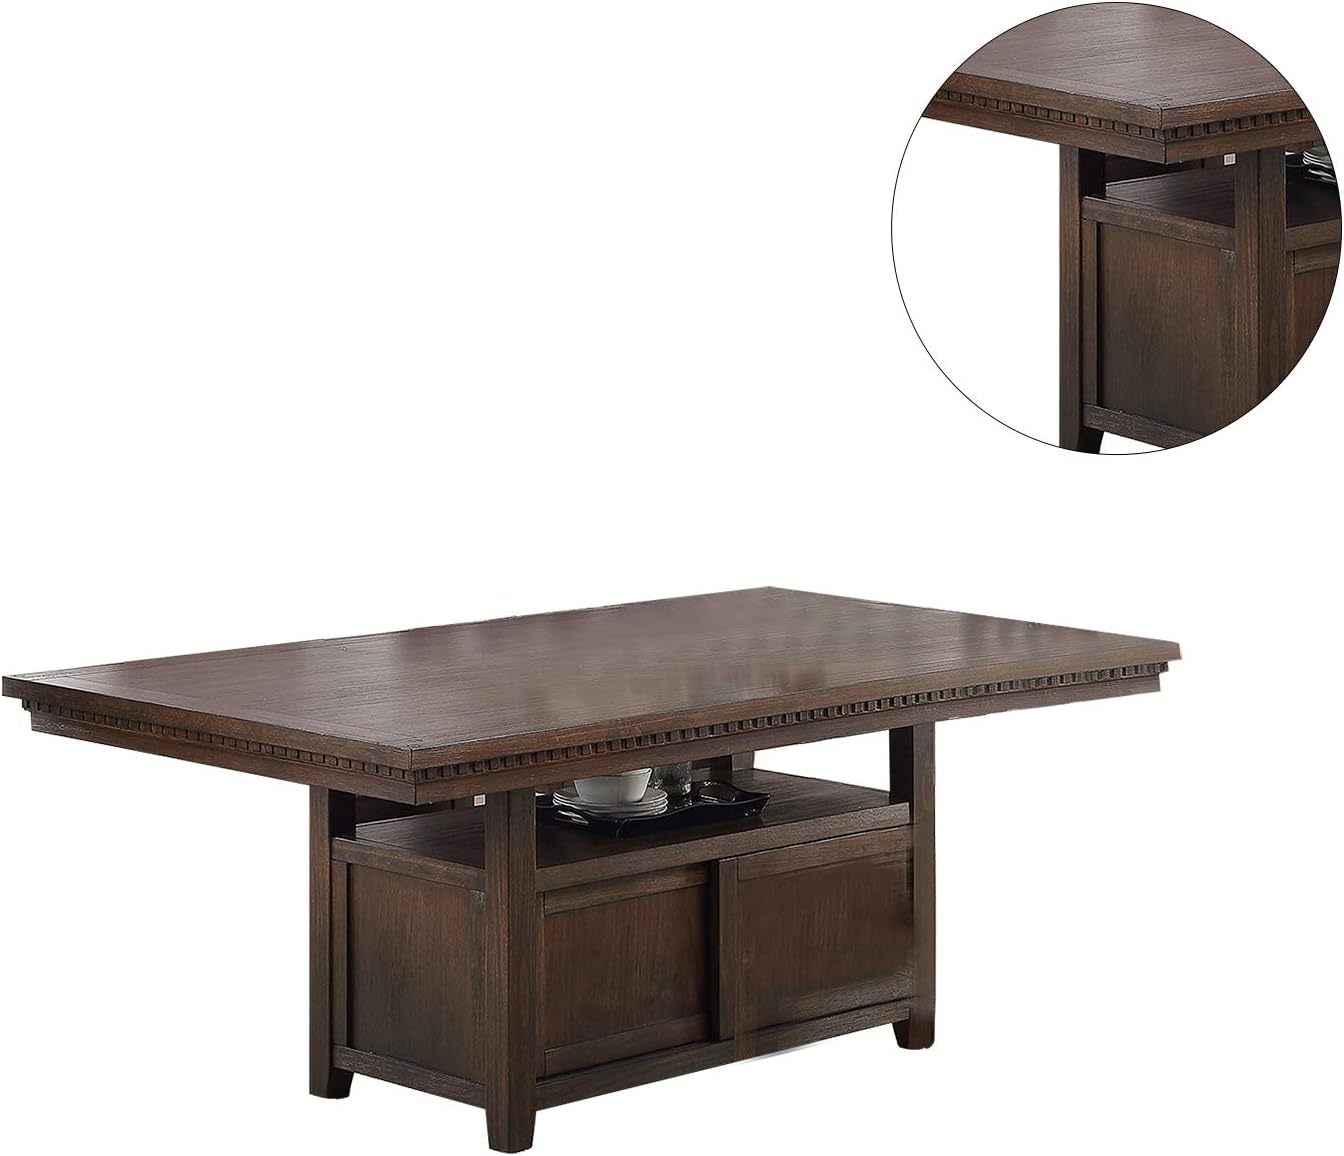 Dining Room Furniture Rustic Espresso Table w Storage espresso-wood-dining room-solid